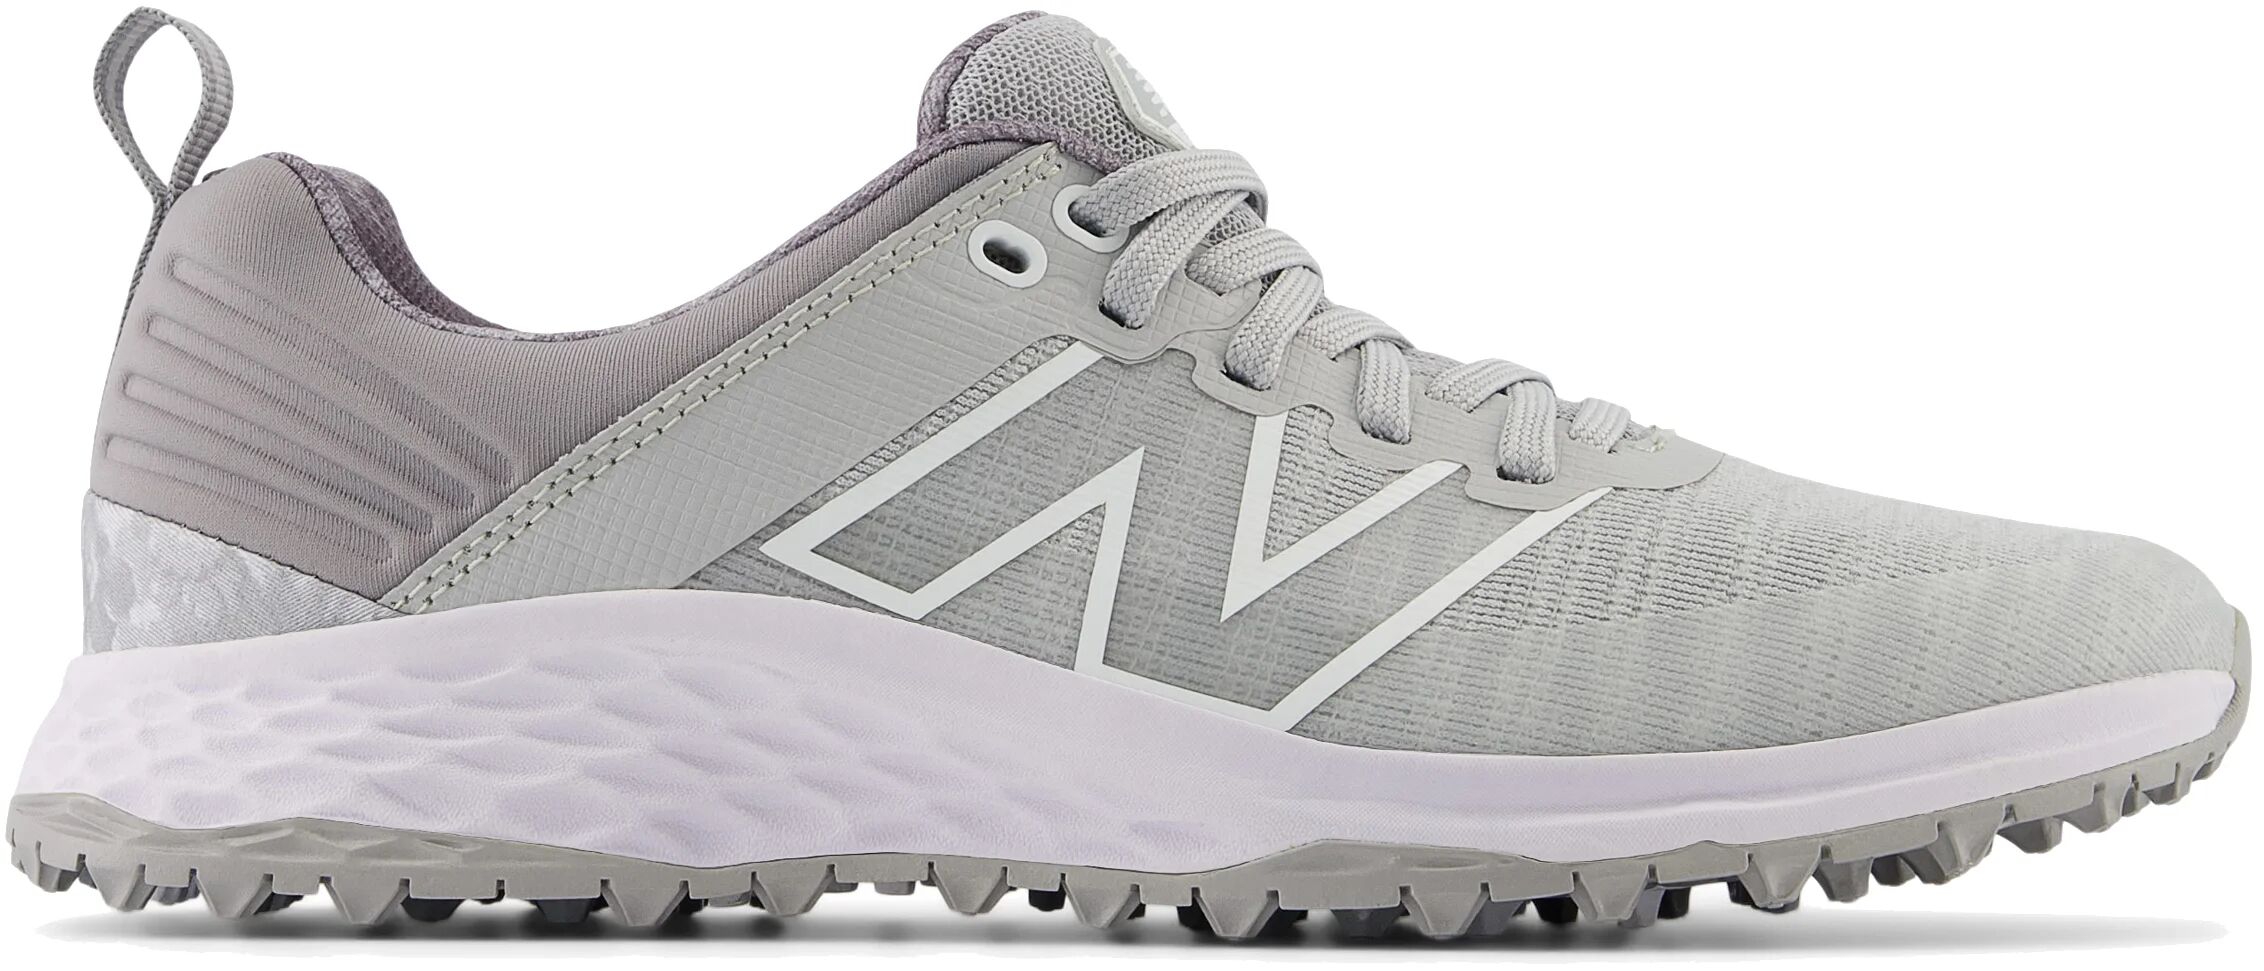 New Balance Womens Fresh Foam Contend v2 Golf Shoes - Grey - 6.5 - B